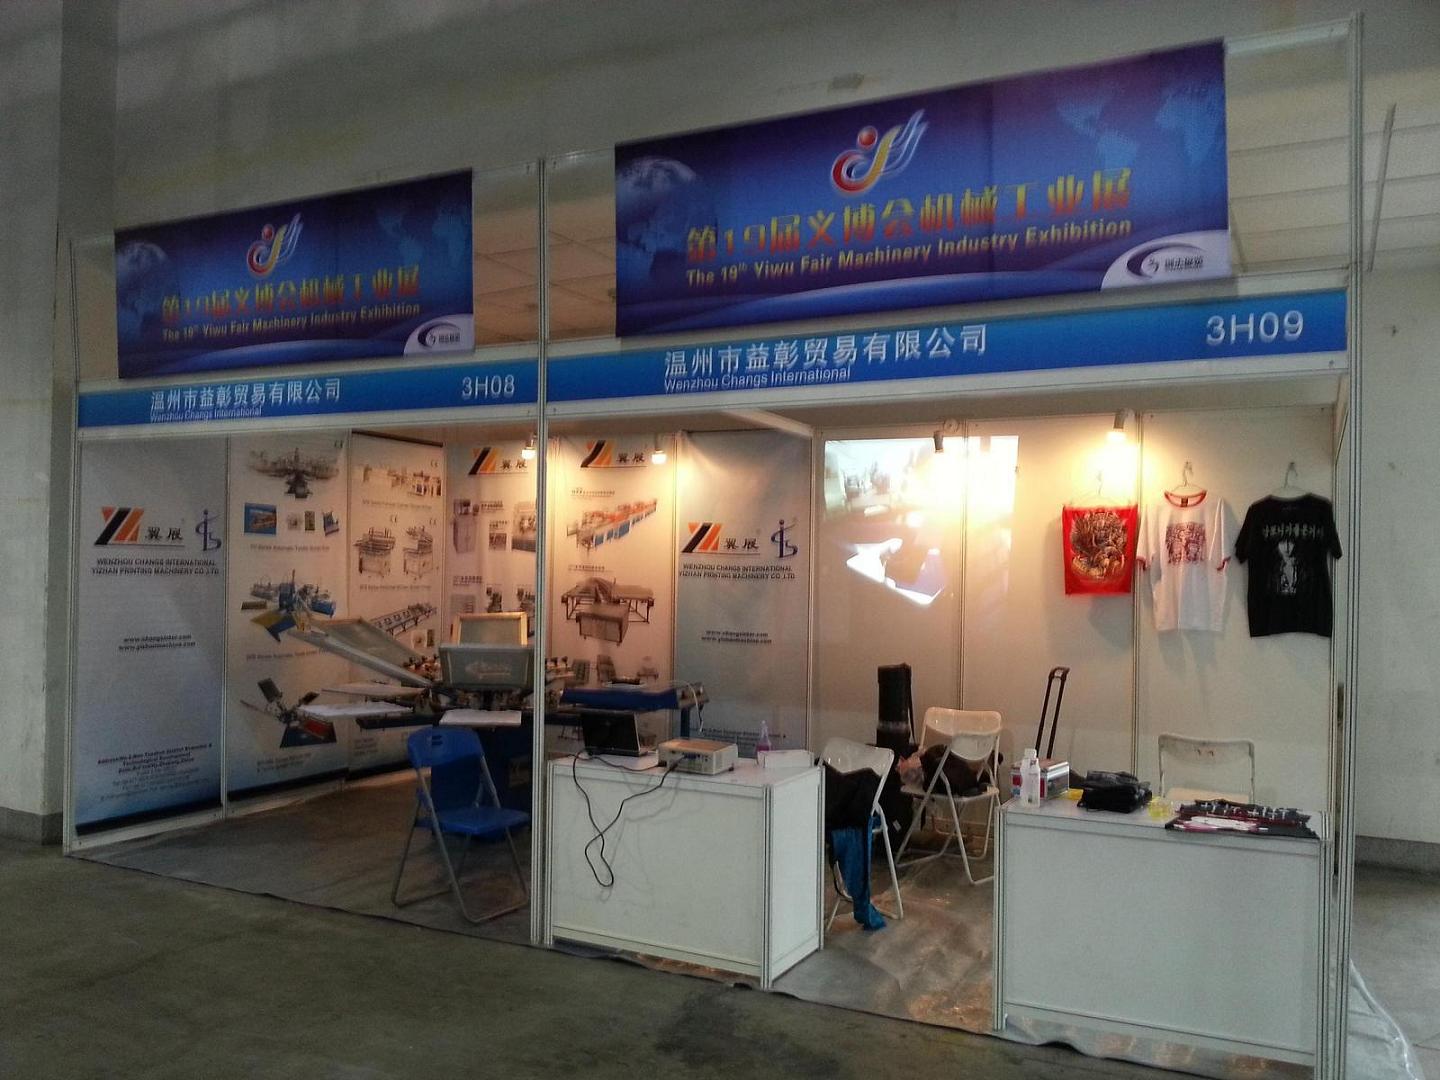 XVIII Exhibicin de Industria Mquinaria de Yiwu de 2012